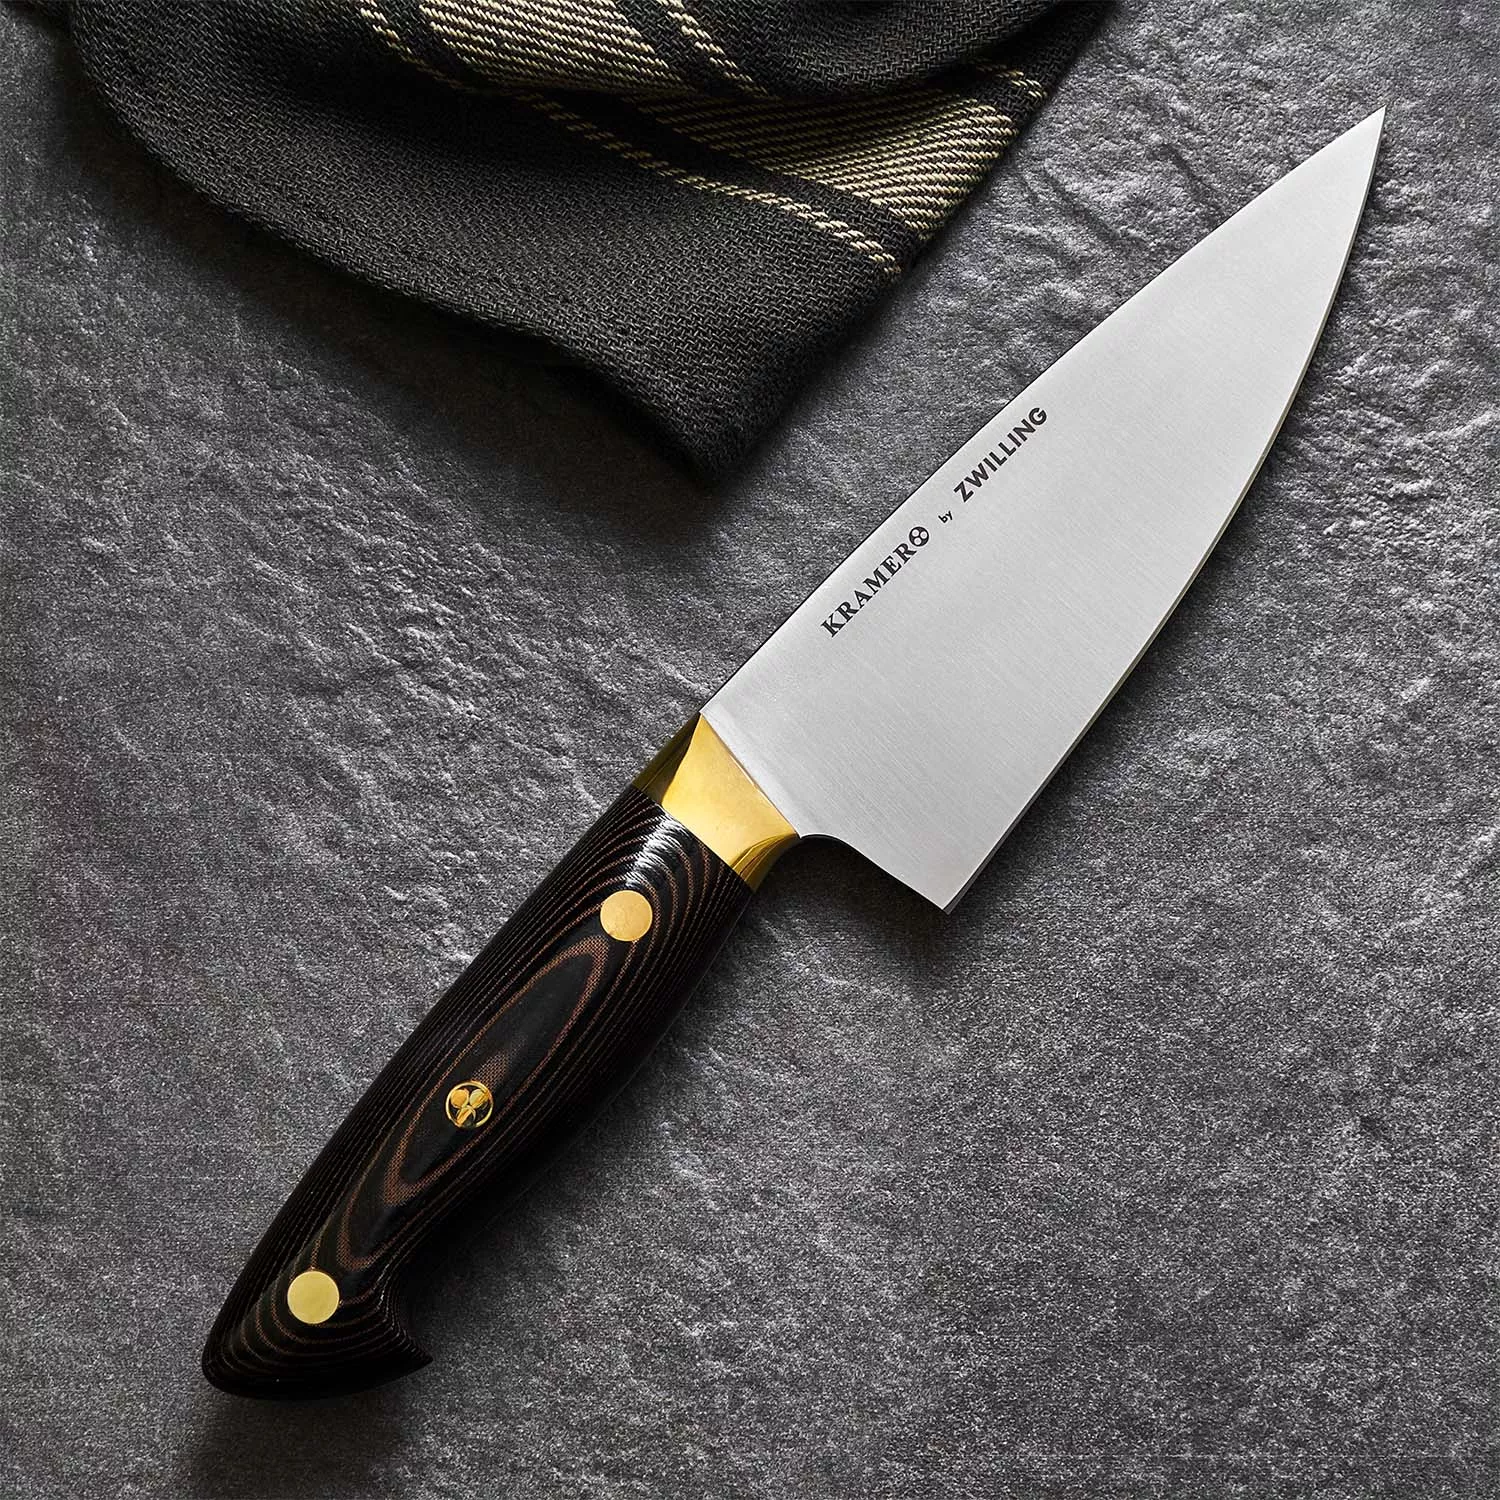 Bob Kramer Cumulus 6 Chef Knife, White